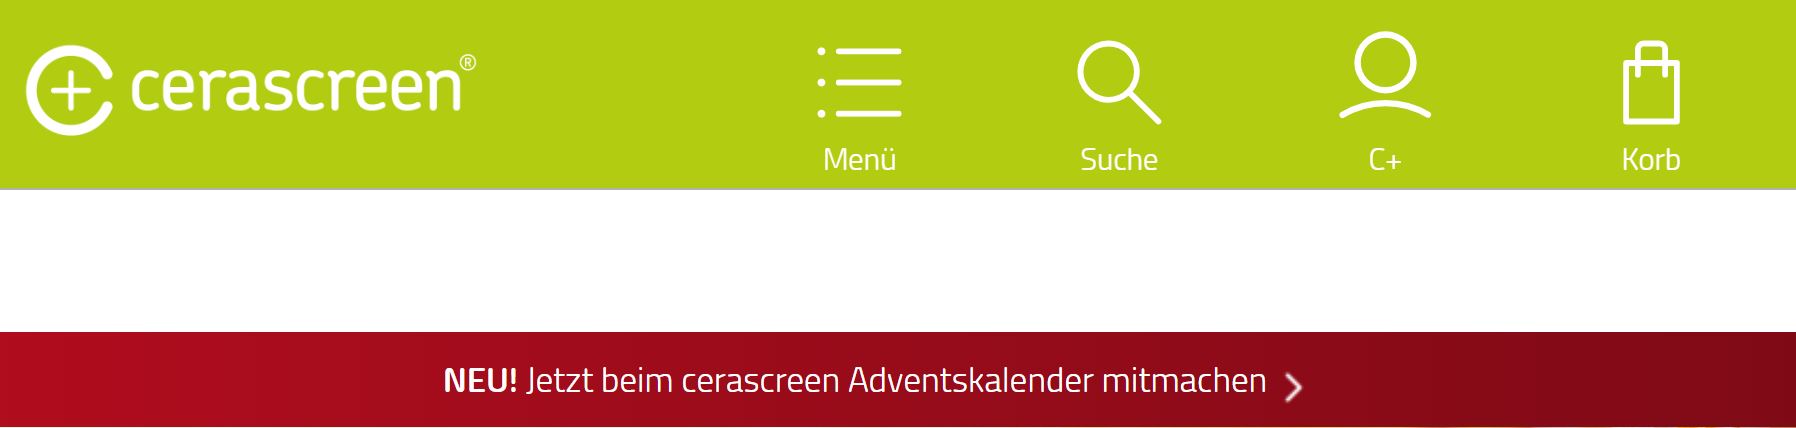 Cerascreen Adventskalender - shopify.de